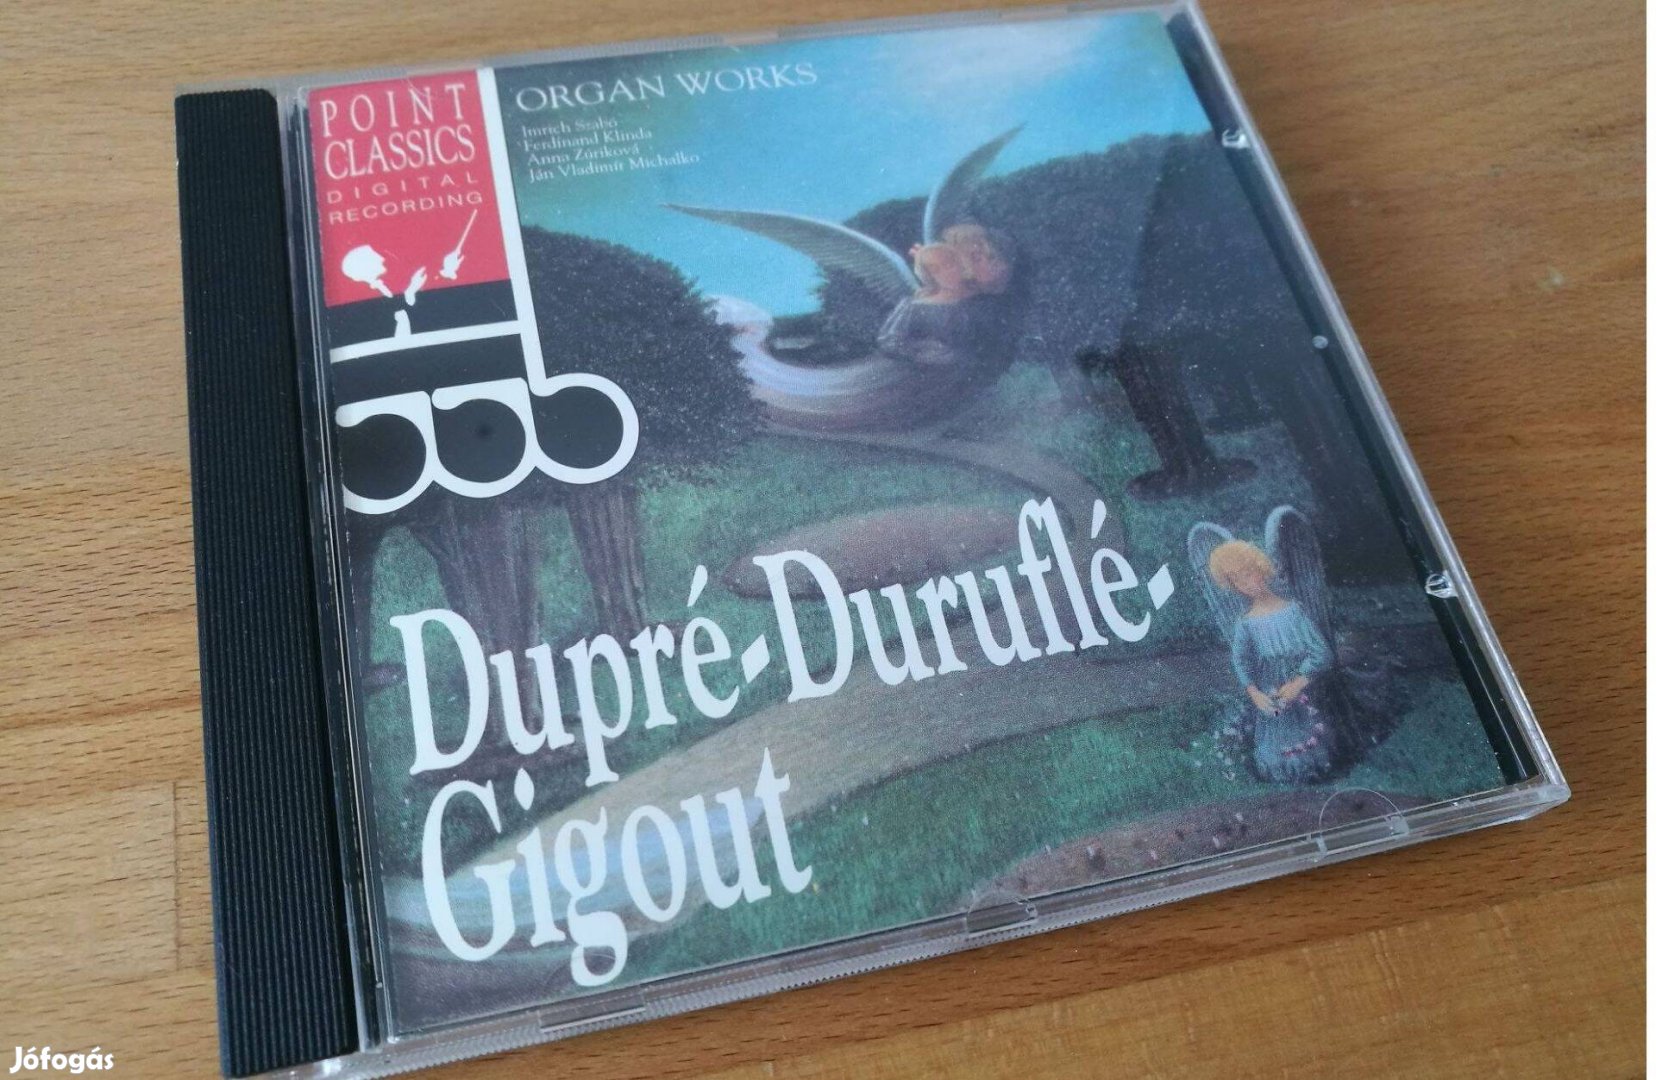 Dupré, Duruflé, Gigout - Organ Works (Point Classics,Germany,1996, CD)